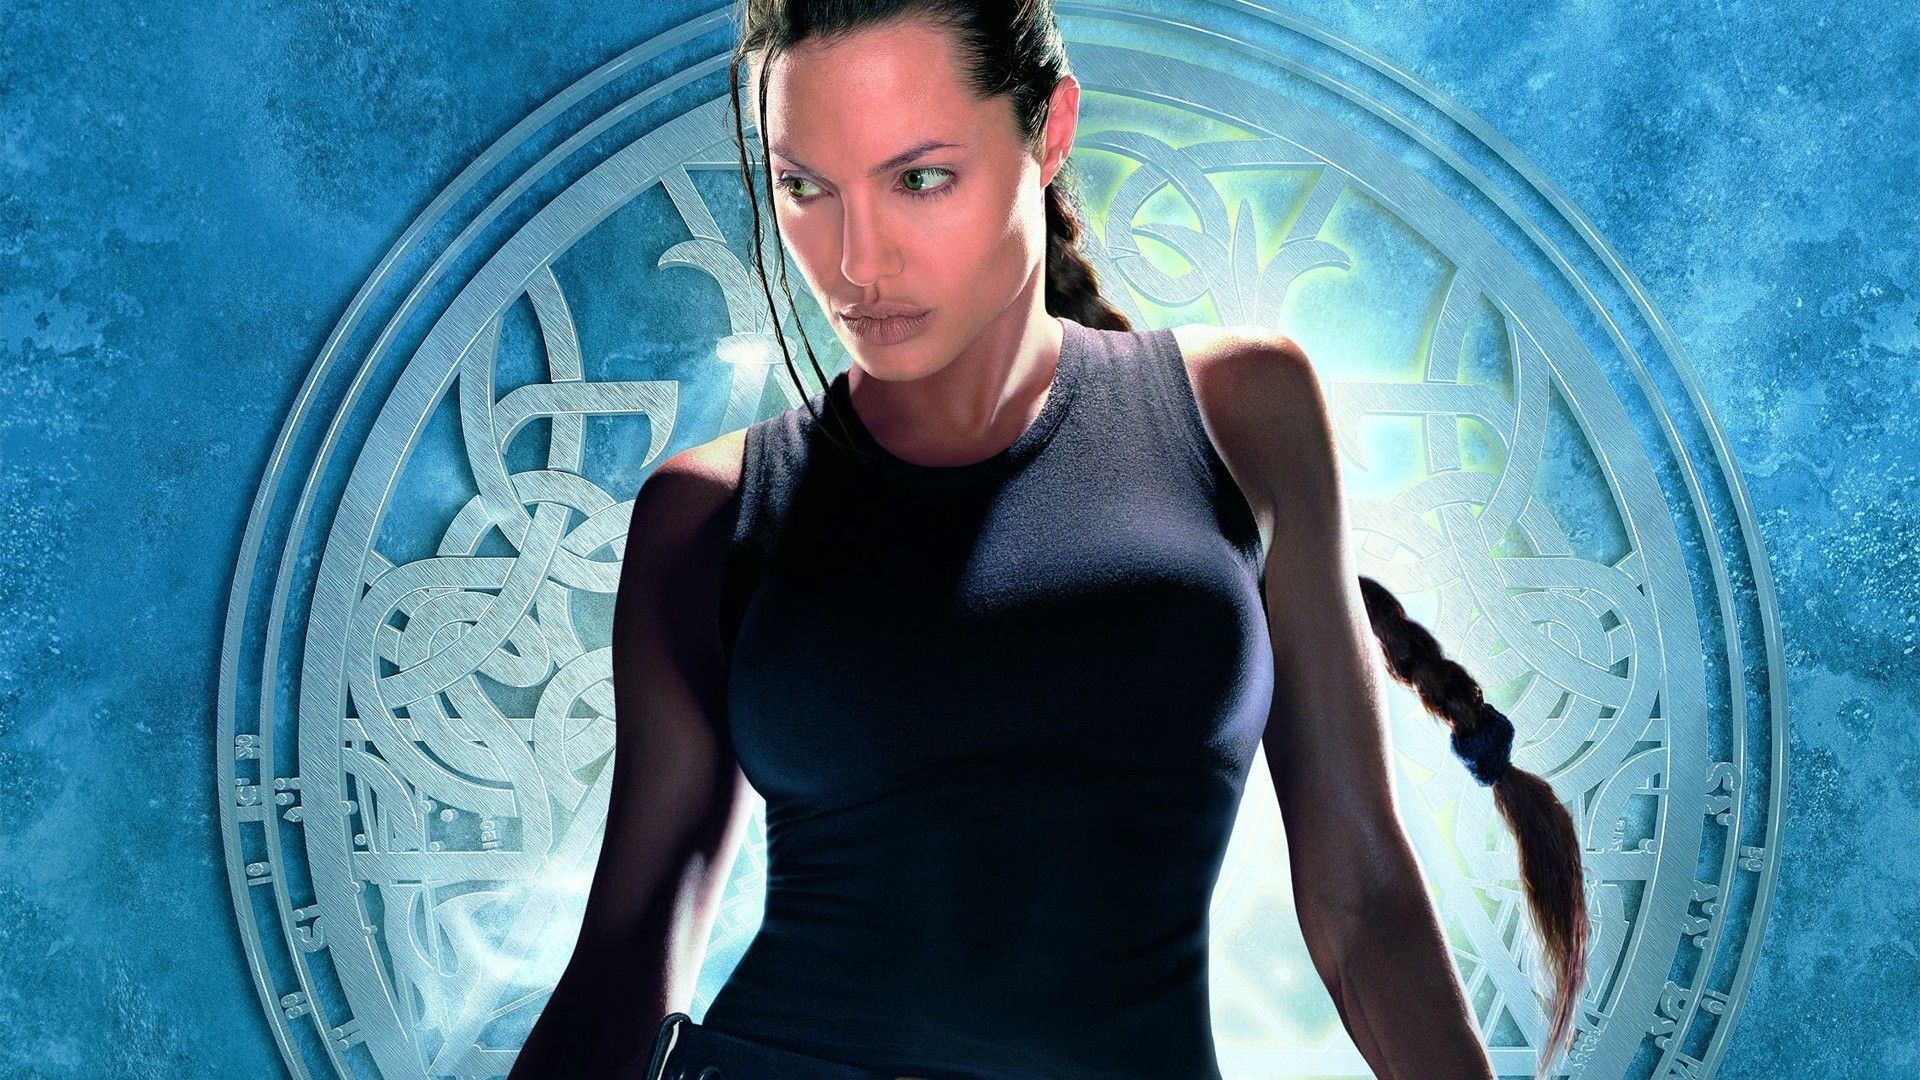 Lara Croft: Tomb Raider The Movies Wallpaper: Lara Croft  Tomb raider  angelina jolie, Lara croft angelina, Angelina jolie photos